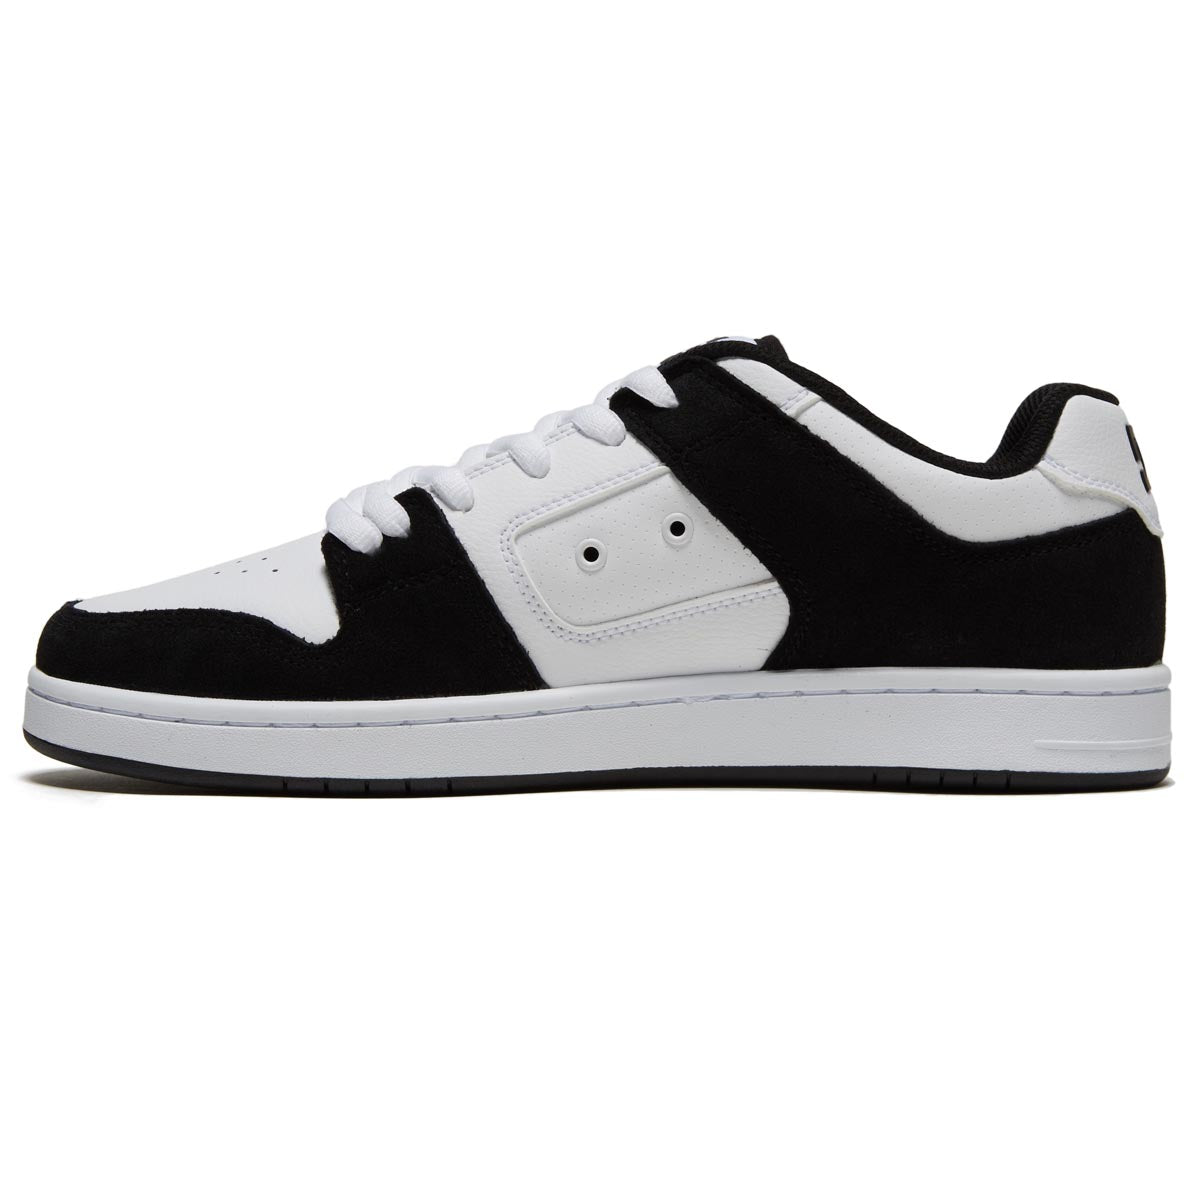 DC Manteca 4 Shoes - White/Black image 2